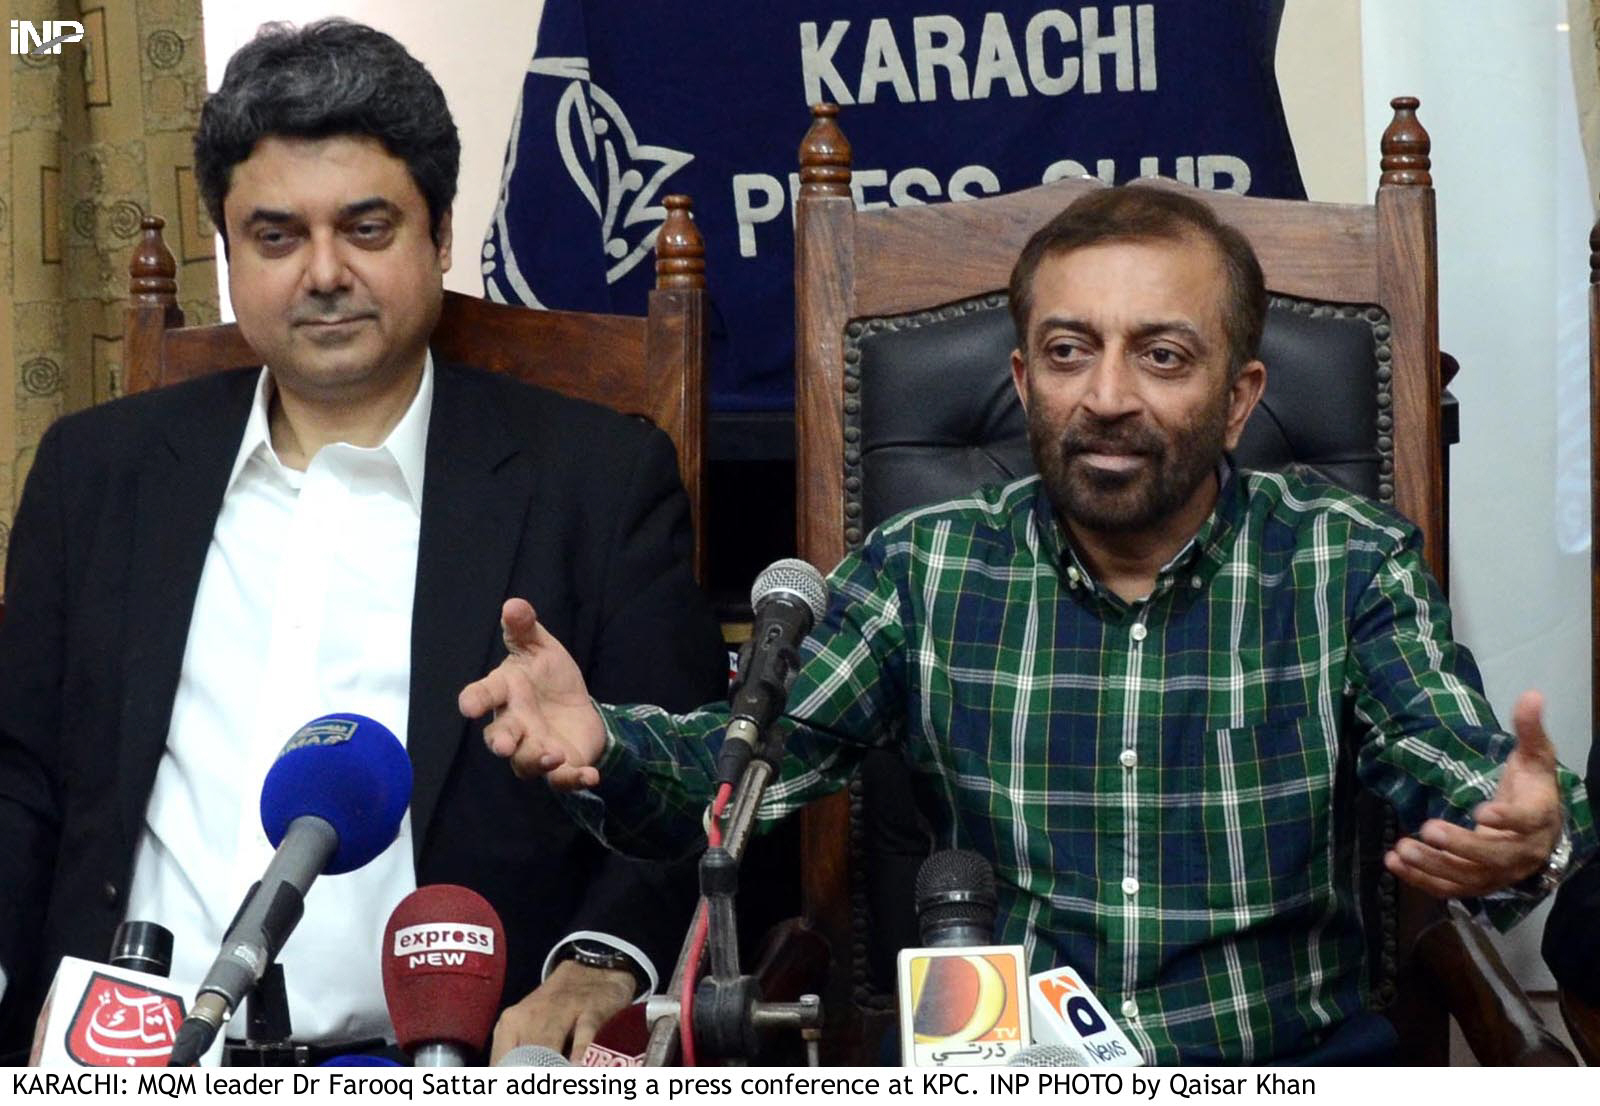 mqm leader dr farooq sattarm along with farogh naseem addressing a press conference at karachi press club photo inp